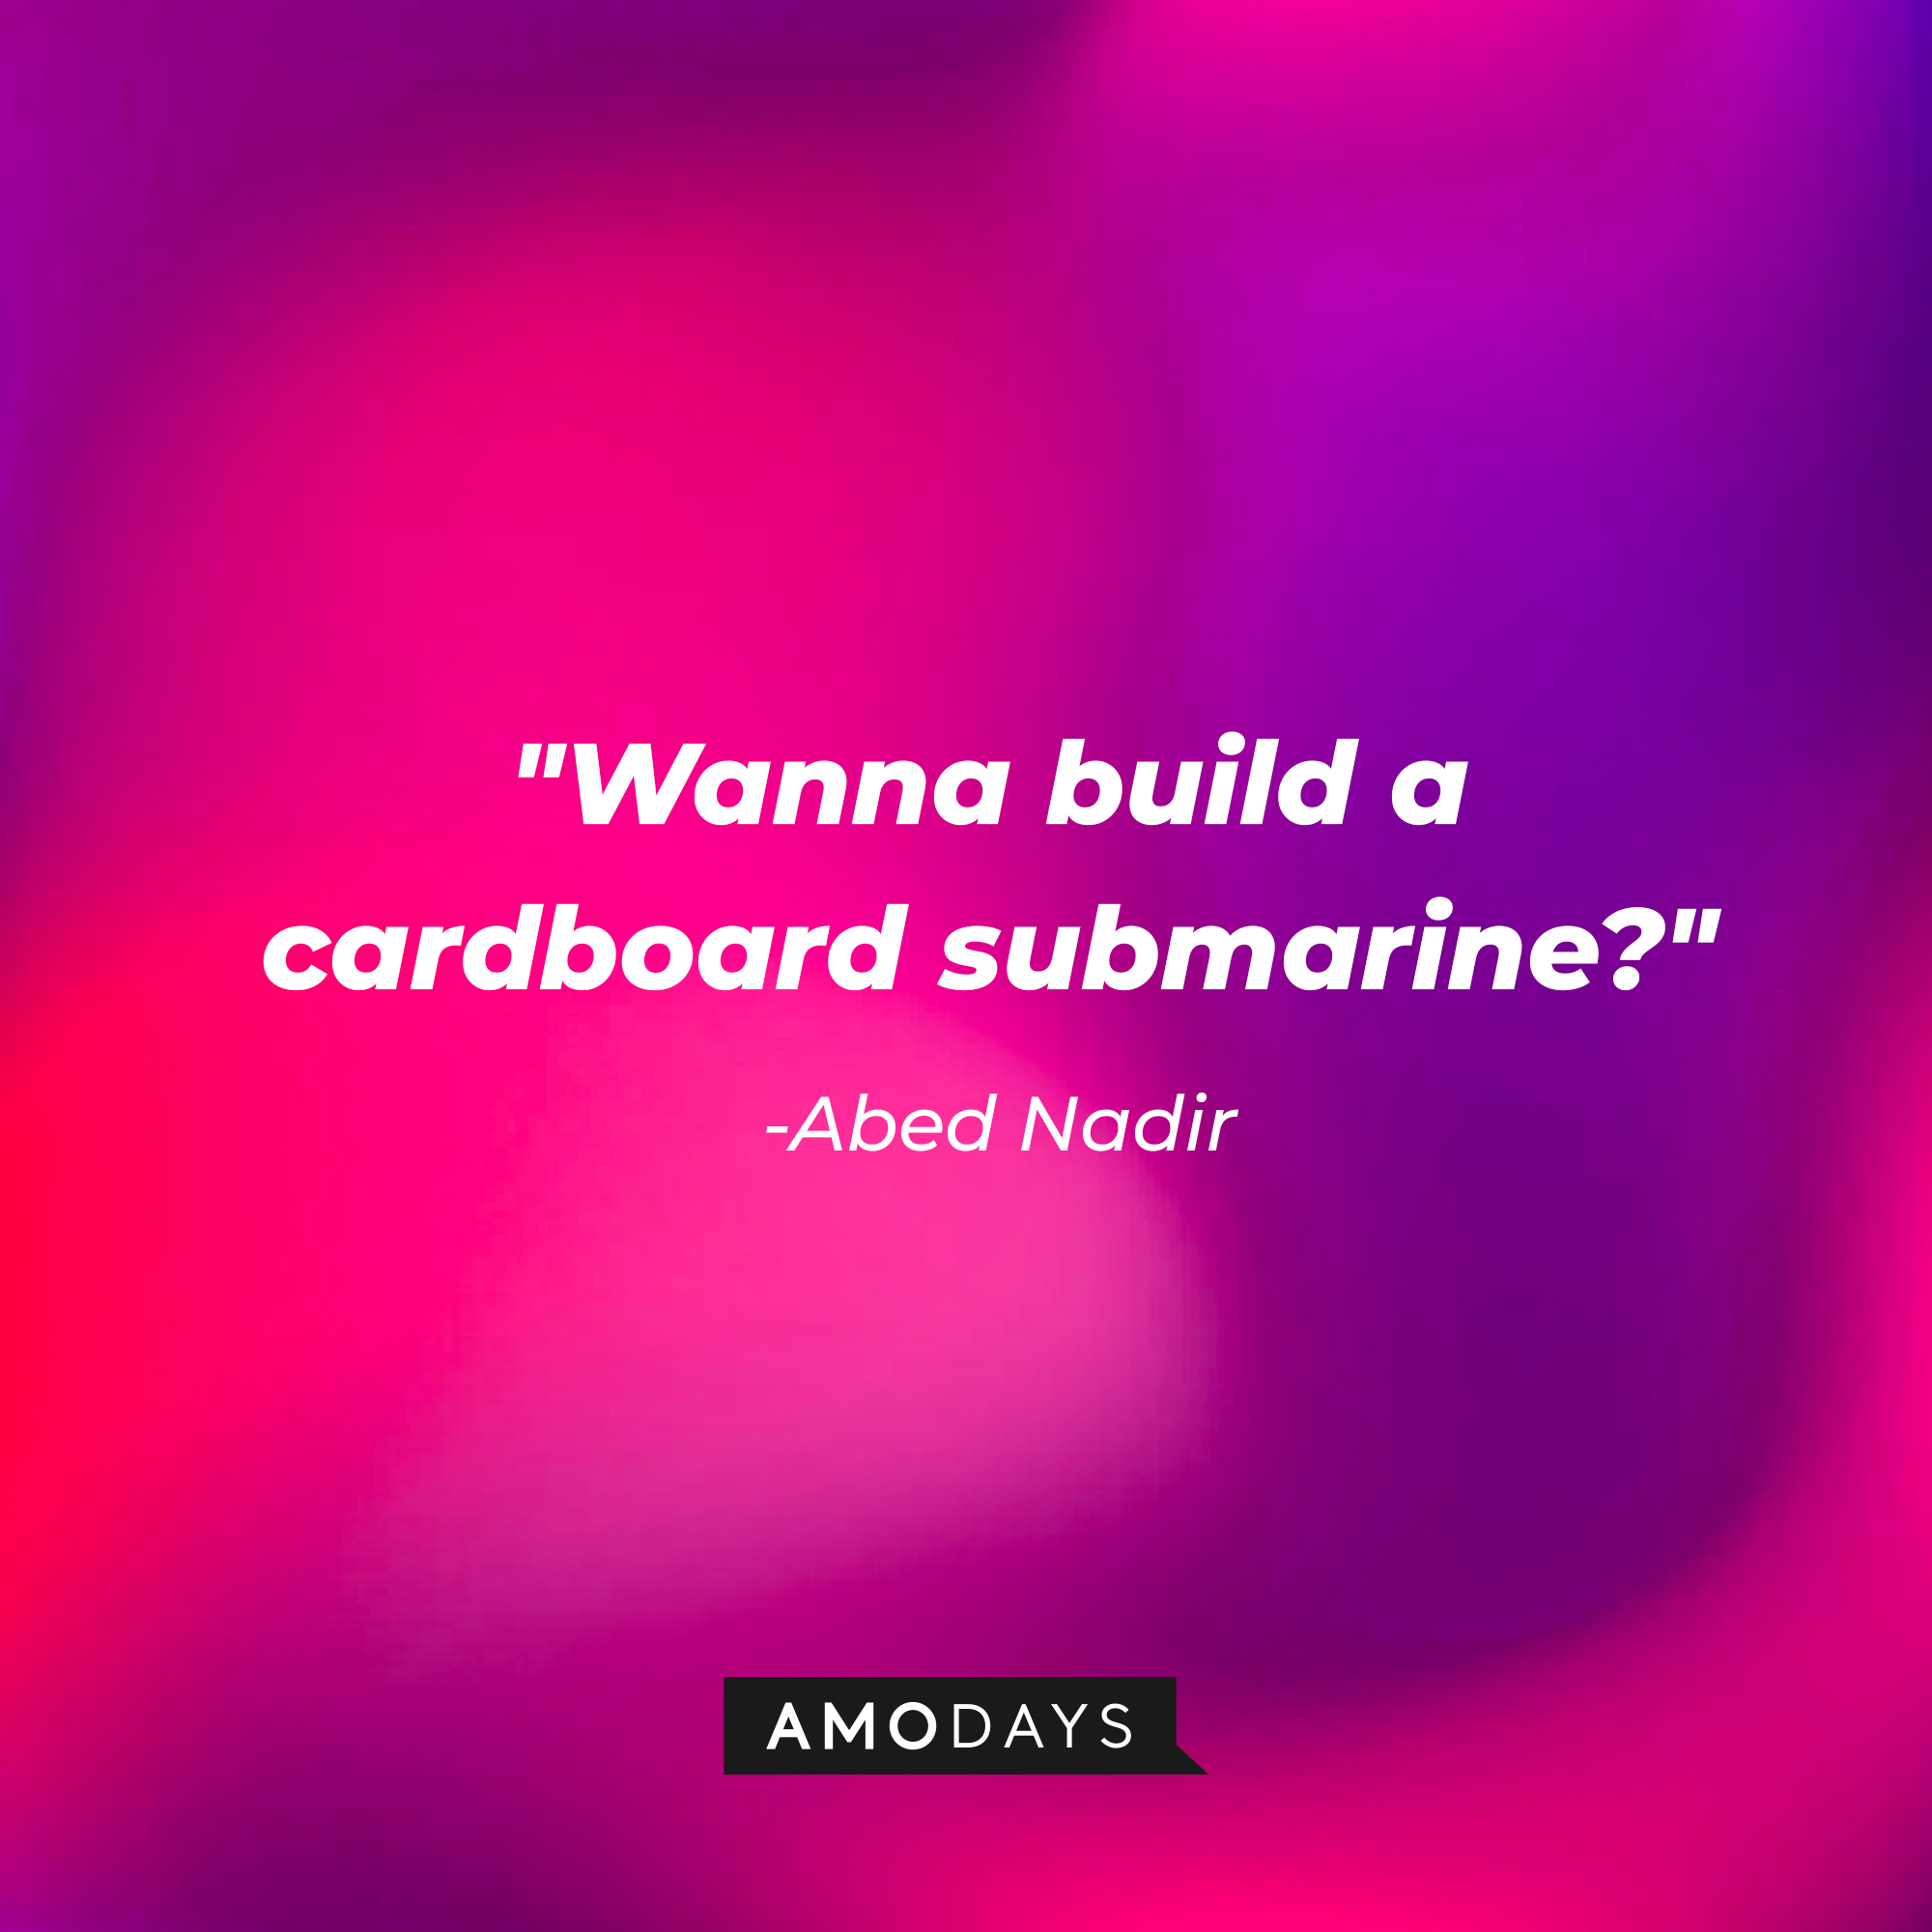 Abed Nadir’s quote: “Wanna build a cardboard submarine?” | Source: AmoDays